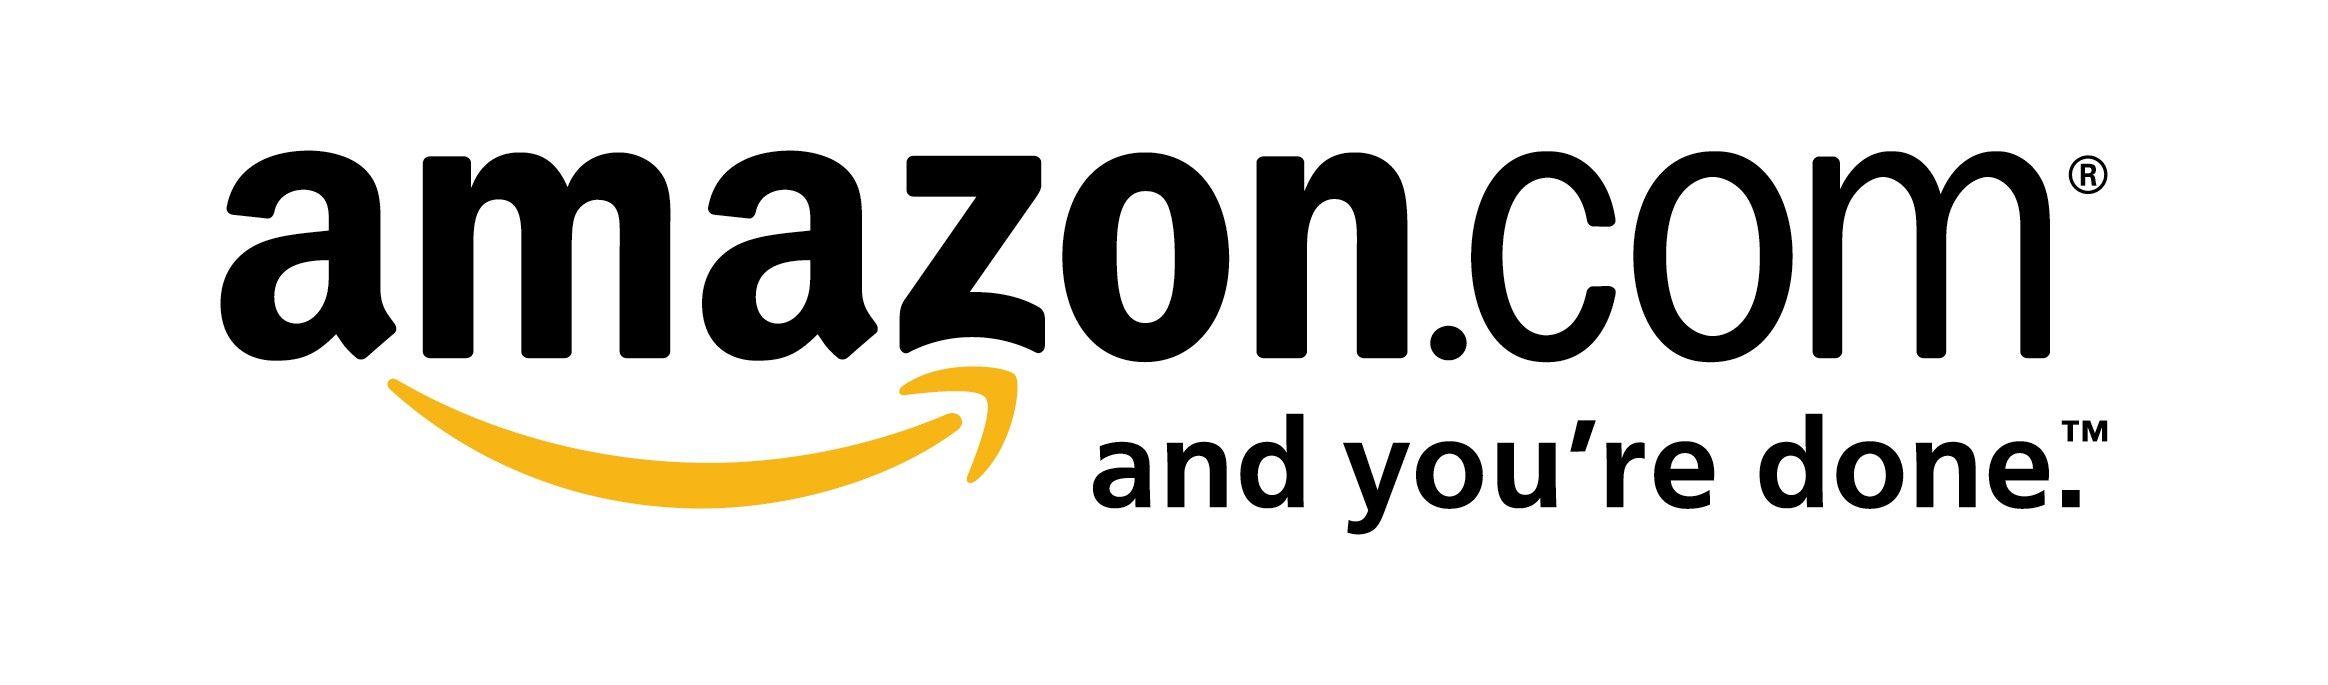 Amazon Logo - File:Amazon logo.jpg - Wikimedia Commons